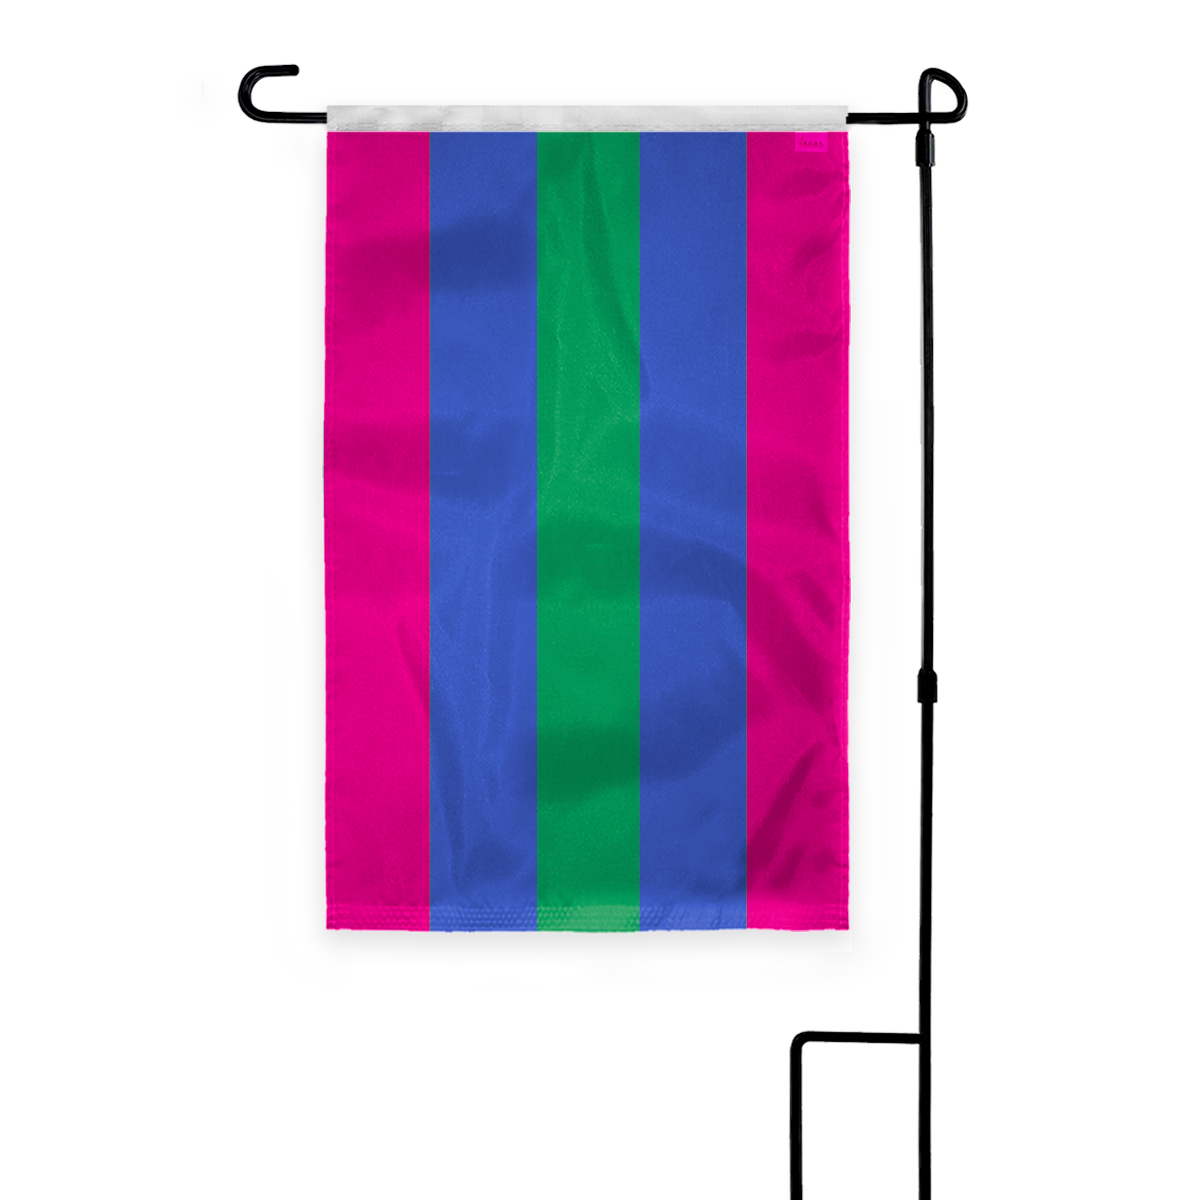 AGAS Trigender Garden Flag 12x18 inch - Printed on Outdoor 200D Nylon